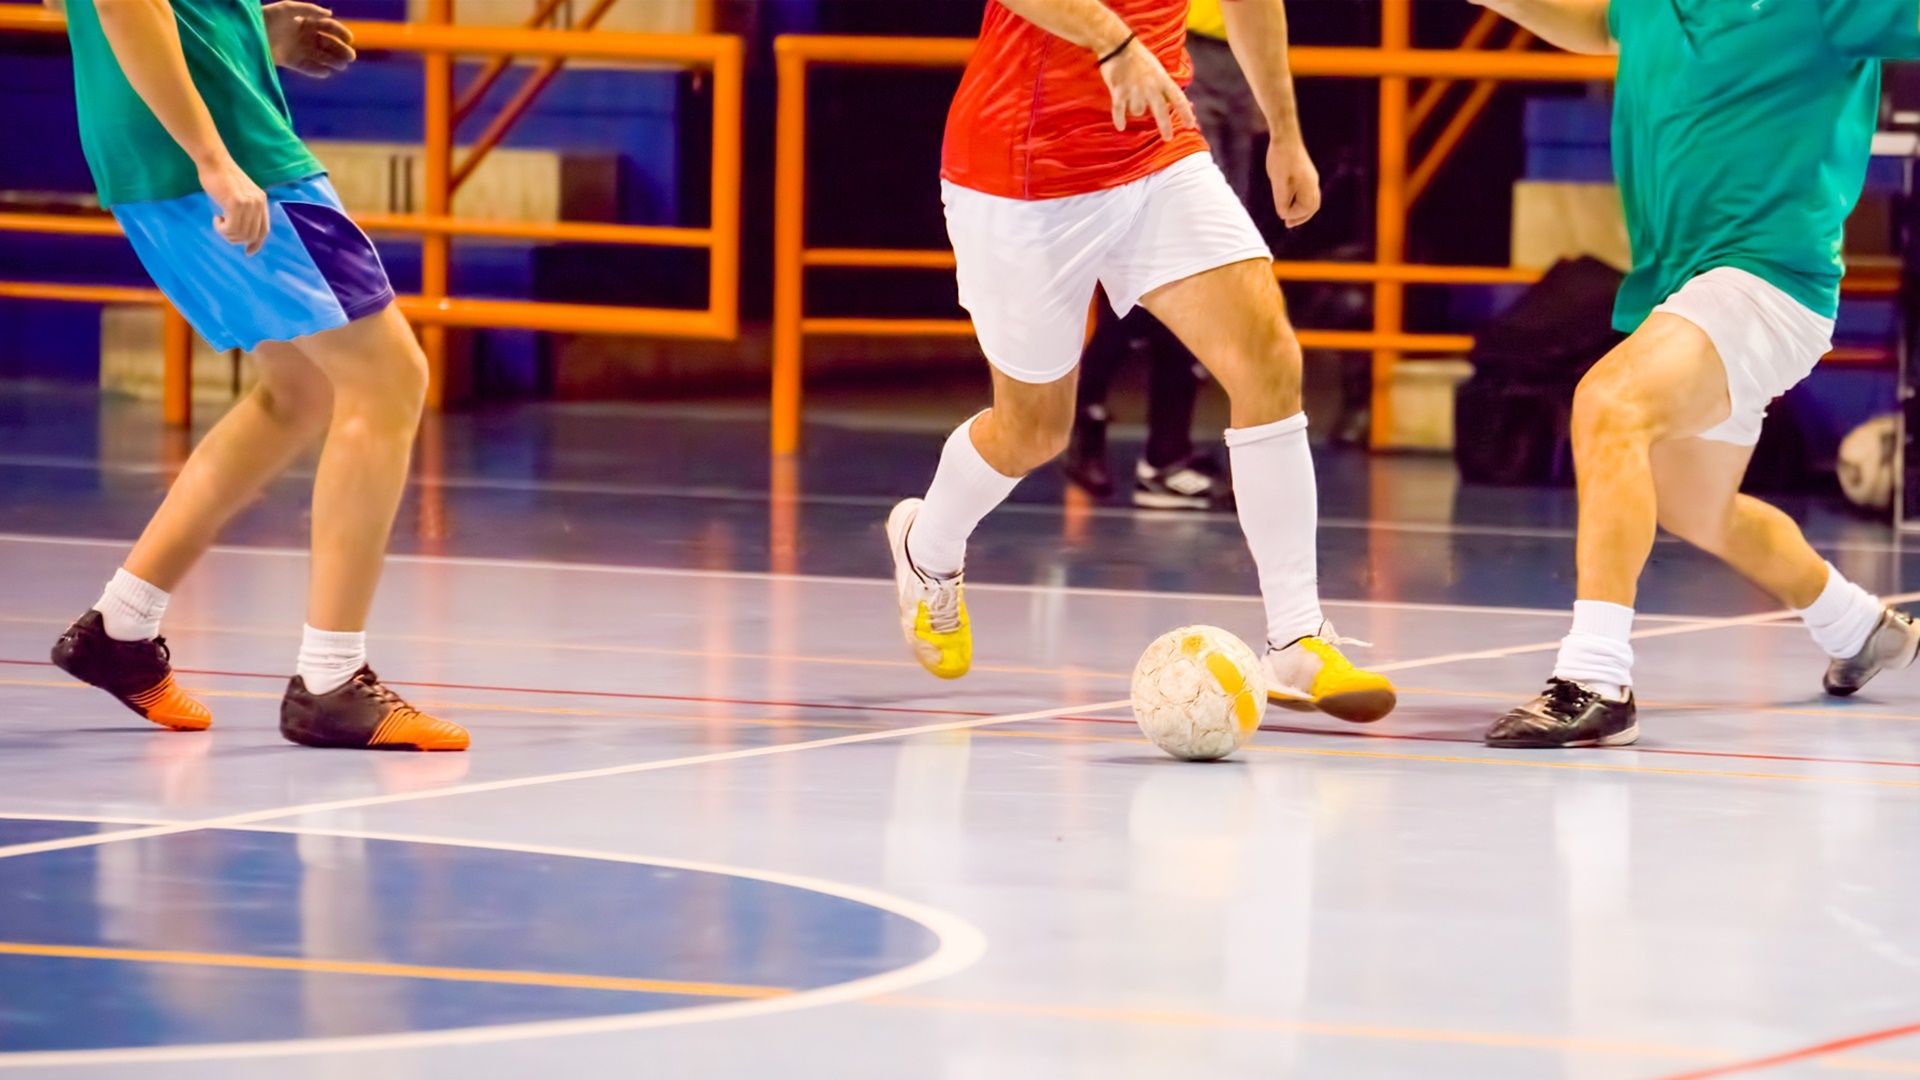 Departamento de Esportes transfere 1ª rodada do Municipal de Futsal